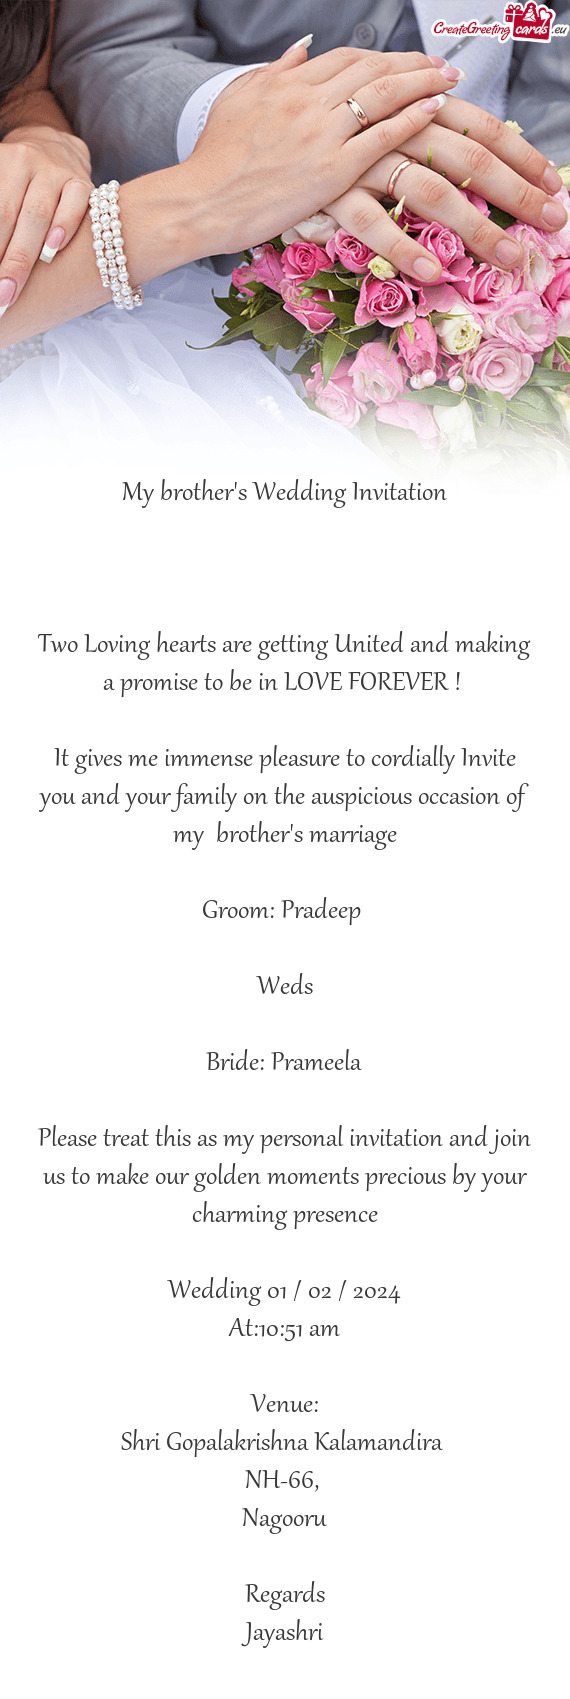 Bride: Prameela